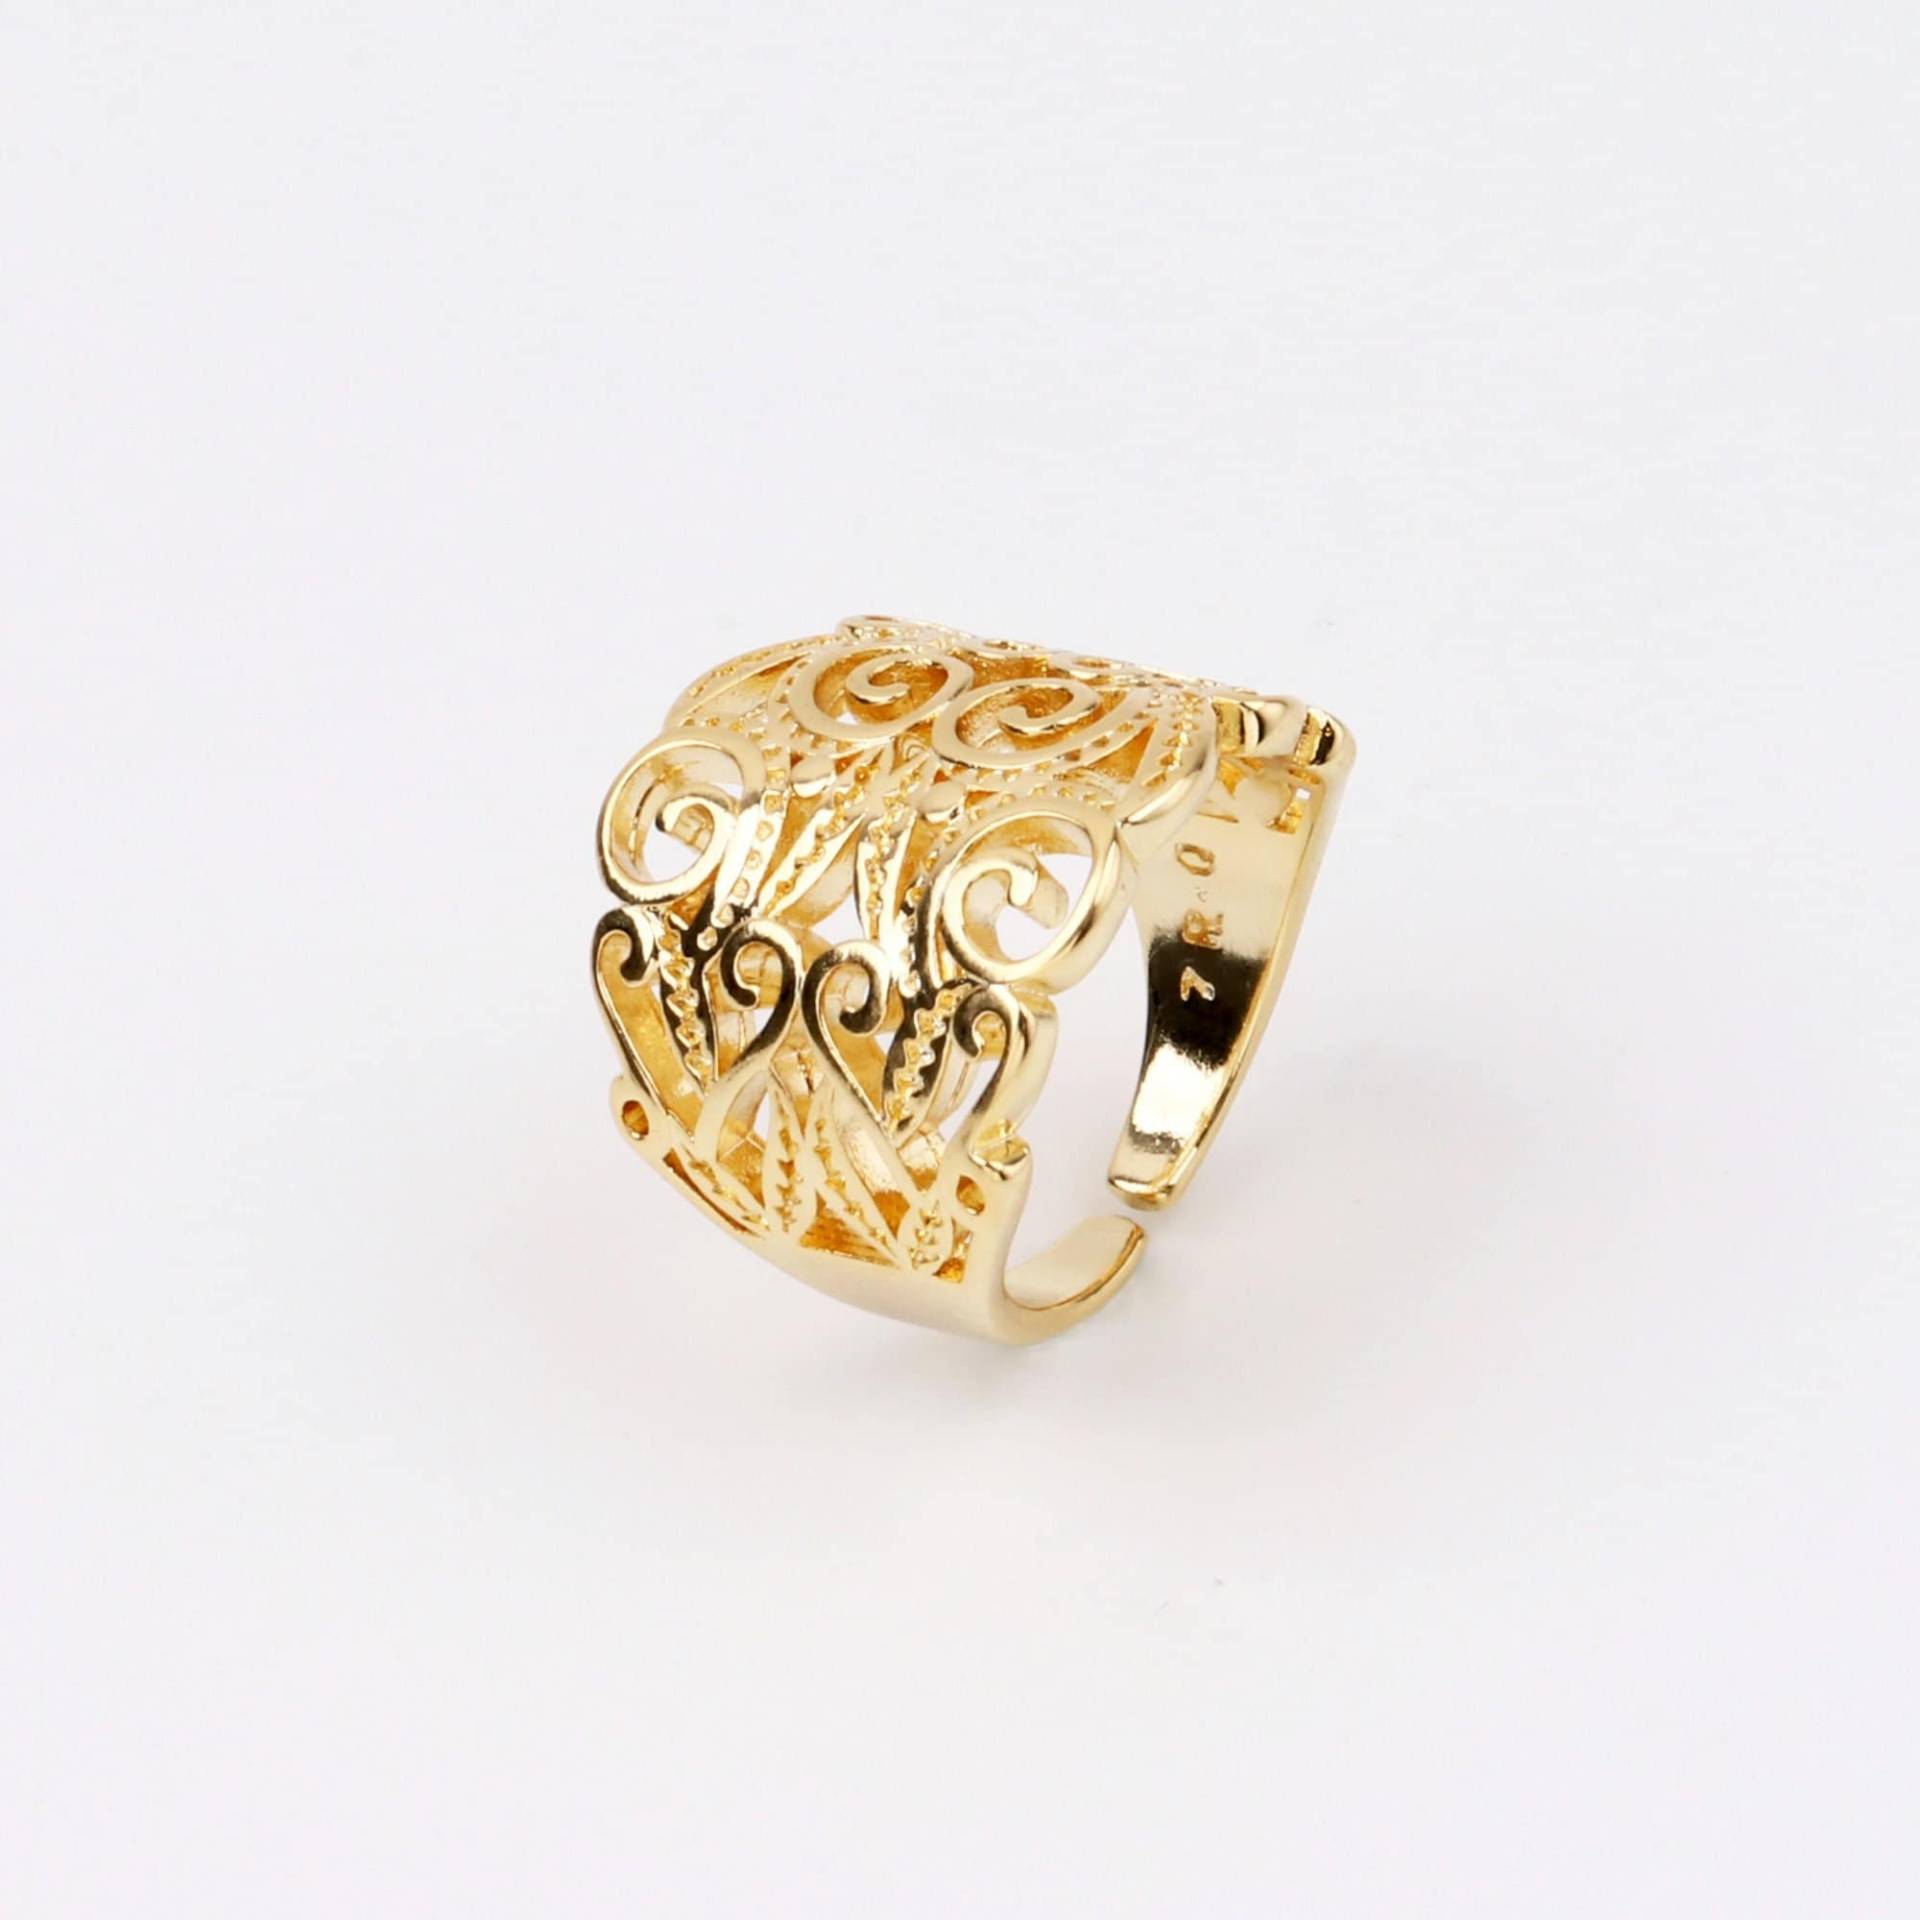 Custom Handmade 1stk Zarte 18Kt Gold Filled Runde Chunky Hohlspitze Filigran Muster Verstellbar Ring Minimalist Mode Boutique Marken von EUSUPPLIES